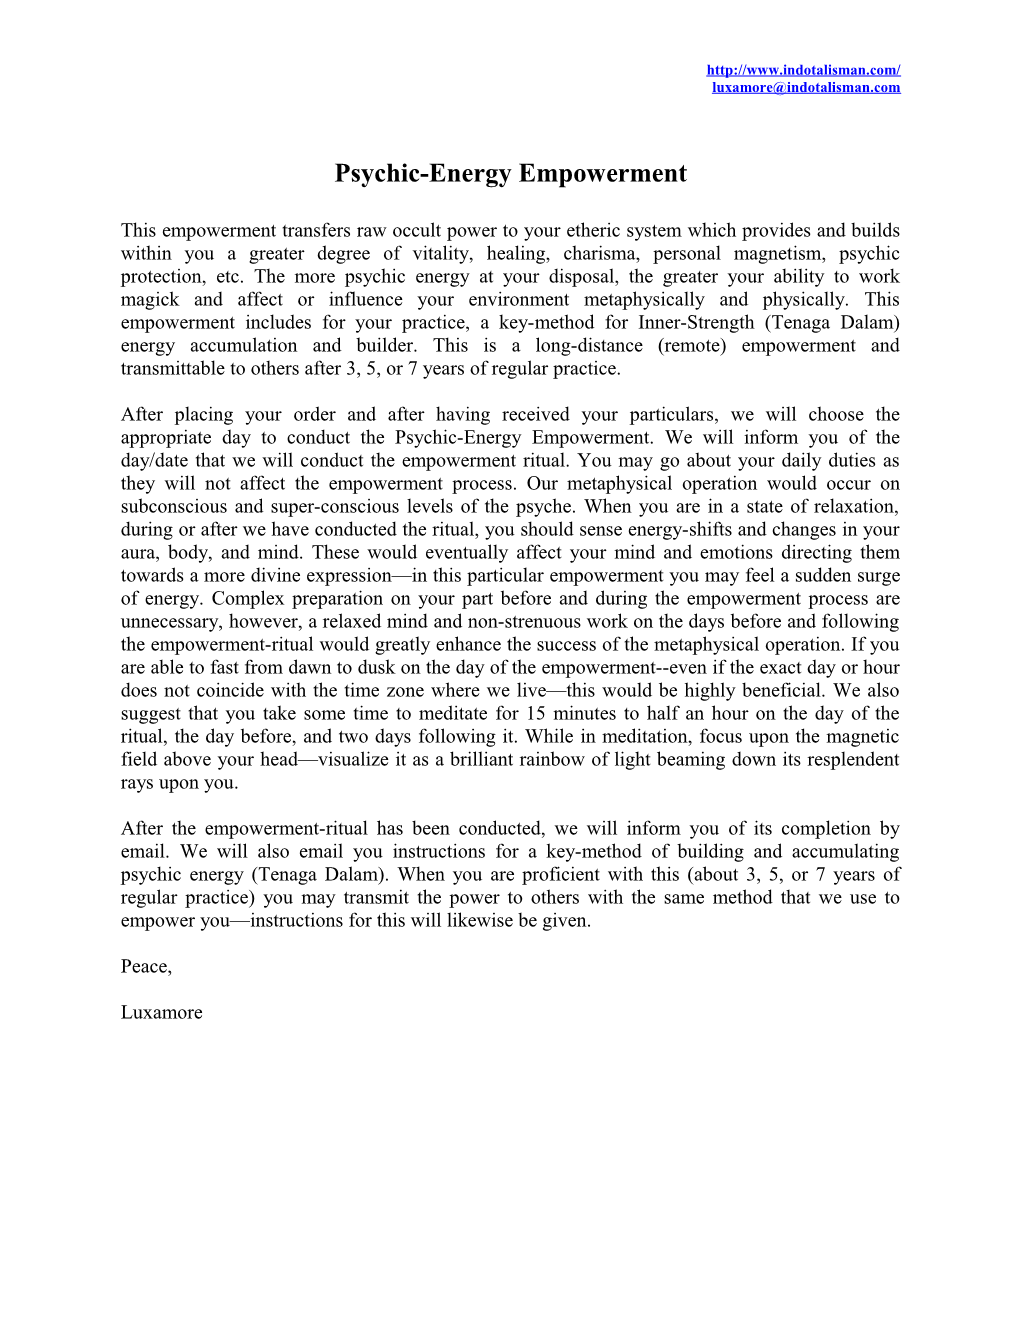 Psychic-Energy Empowerment